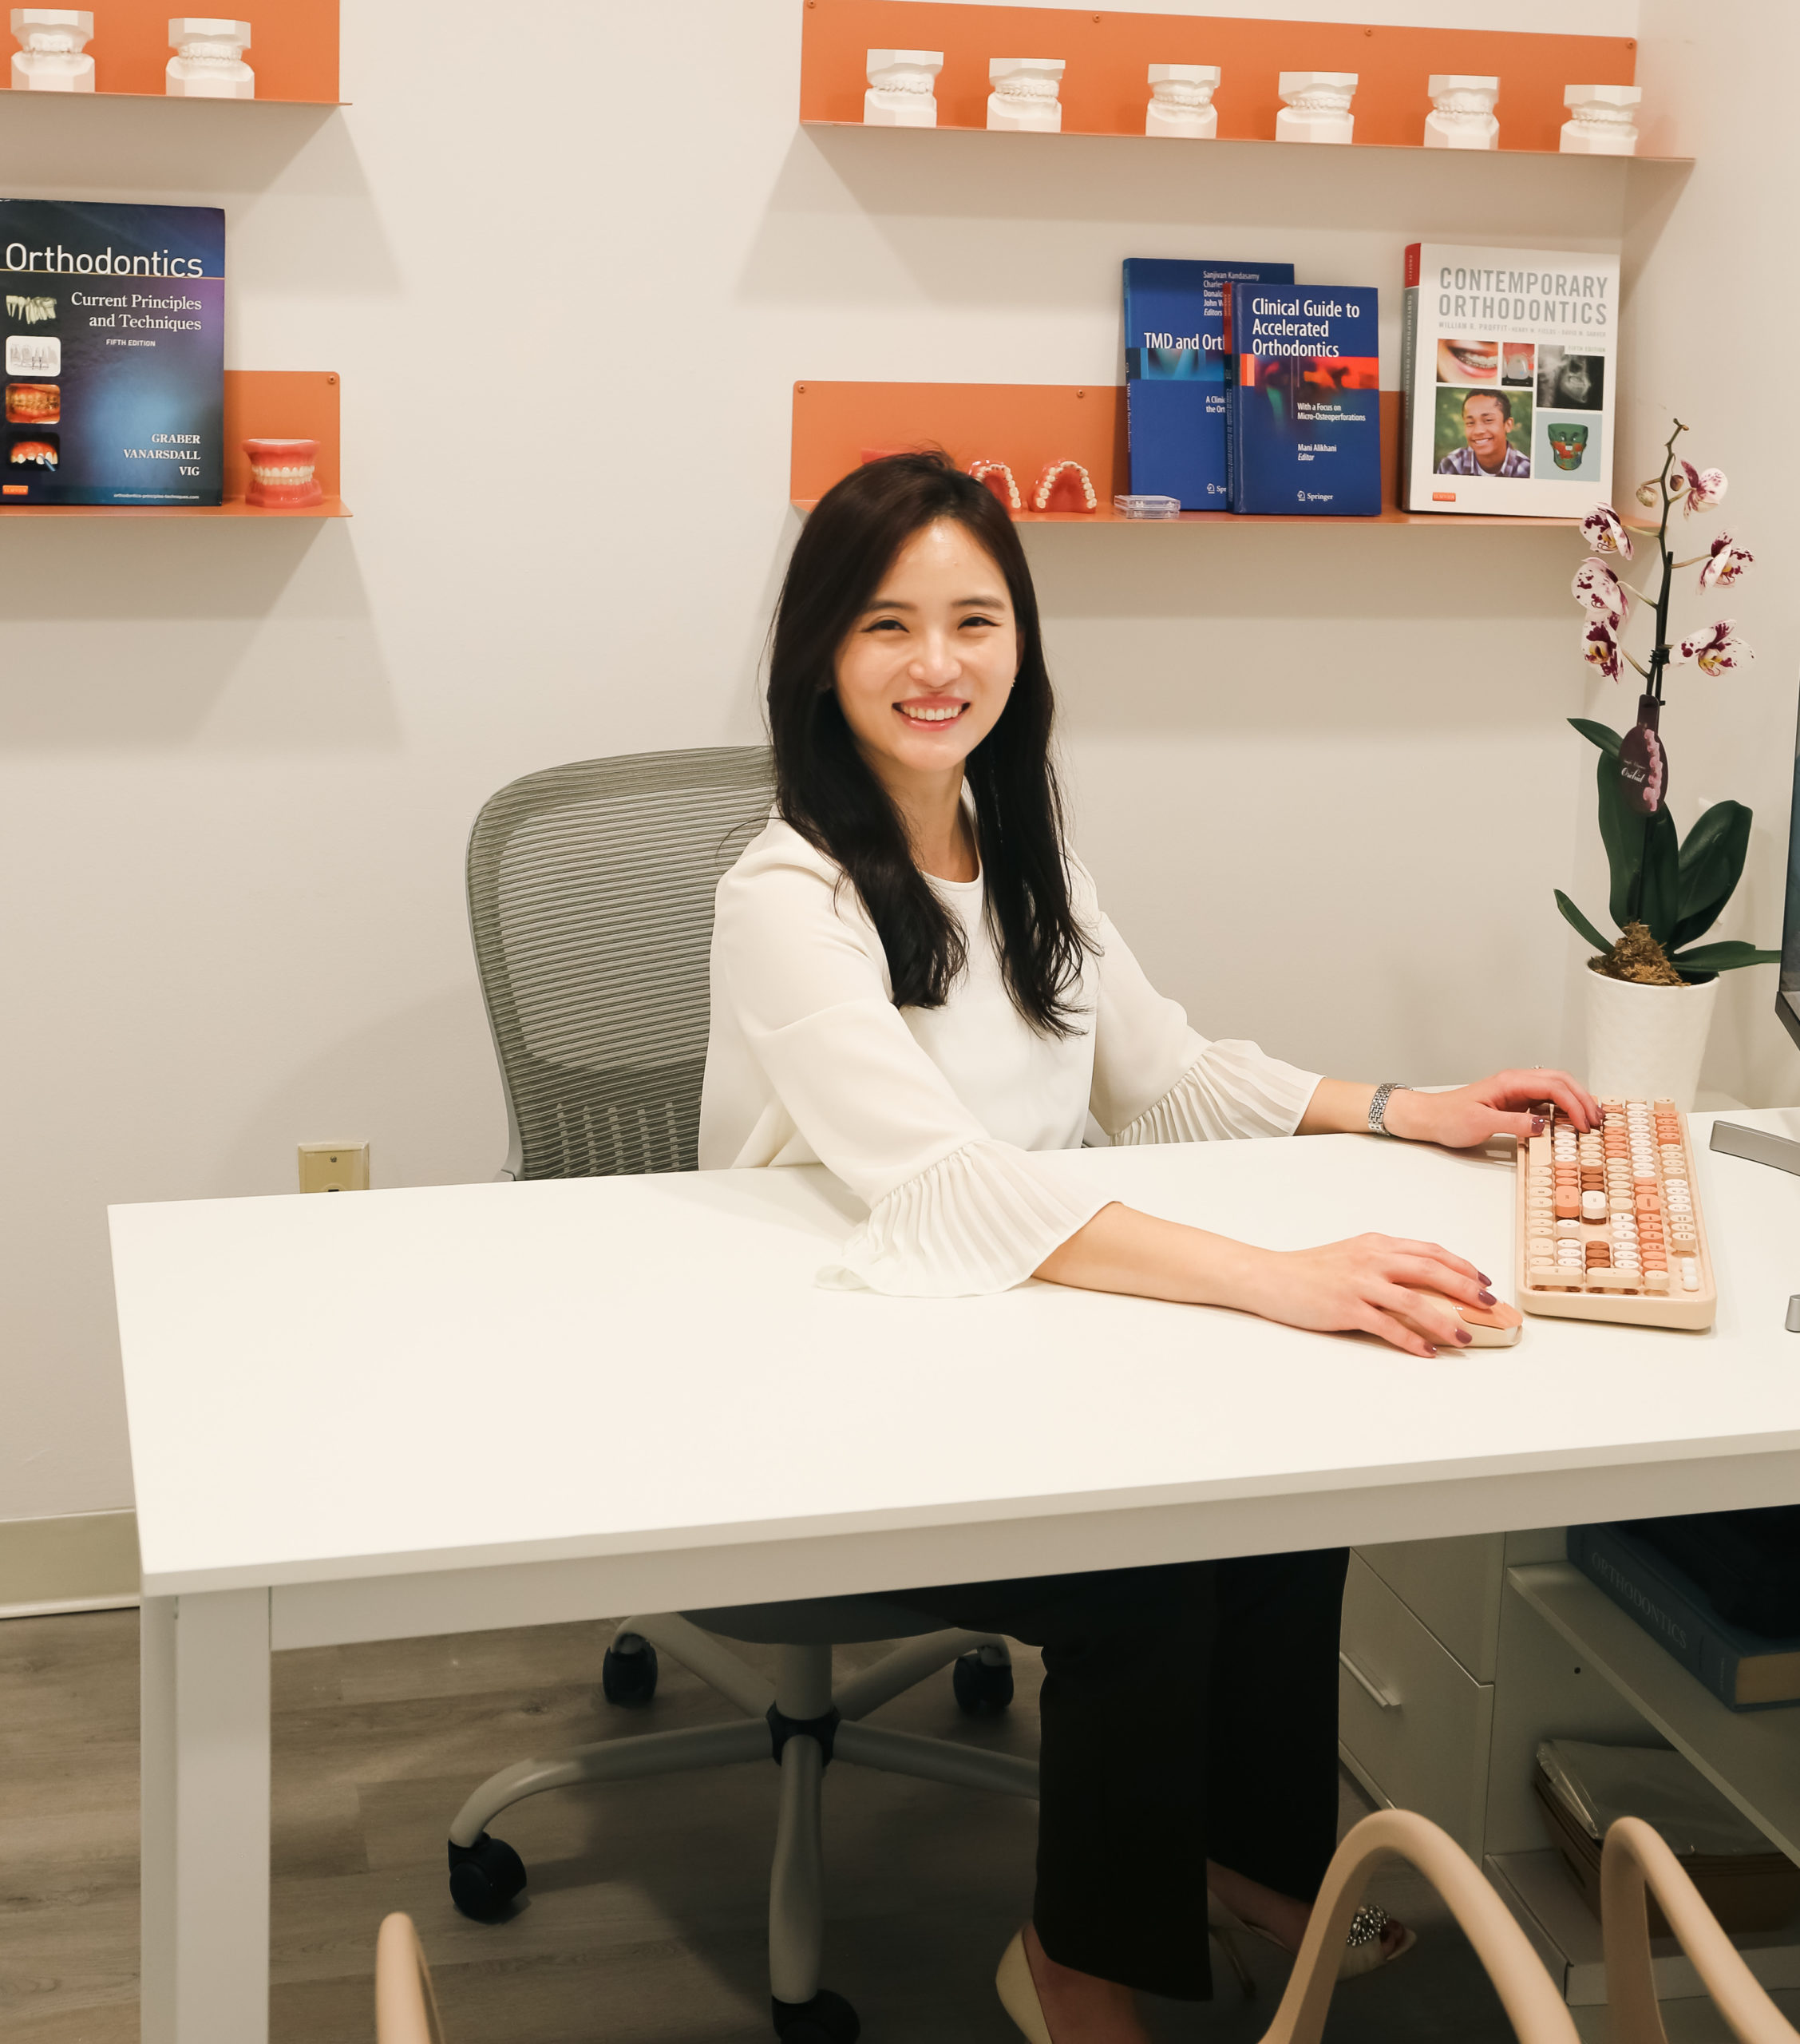 Dr. Yubin working at her desk